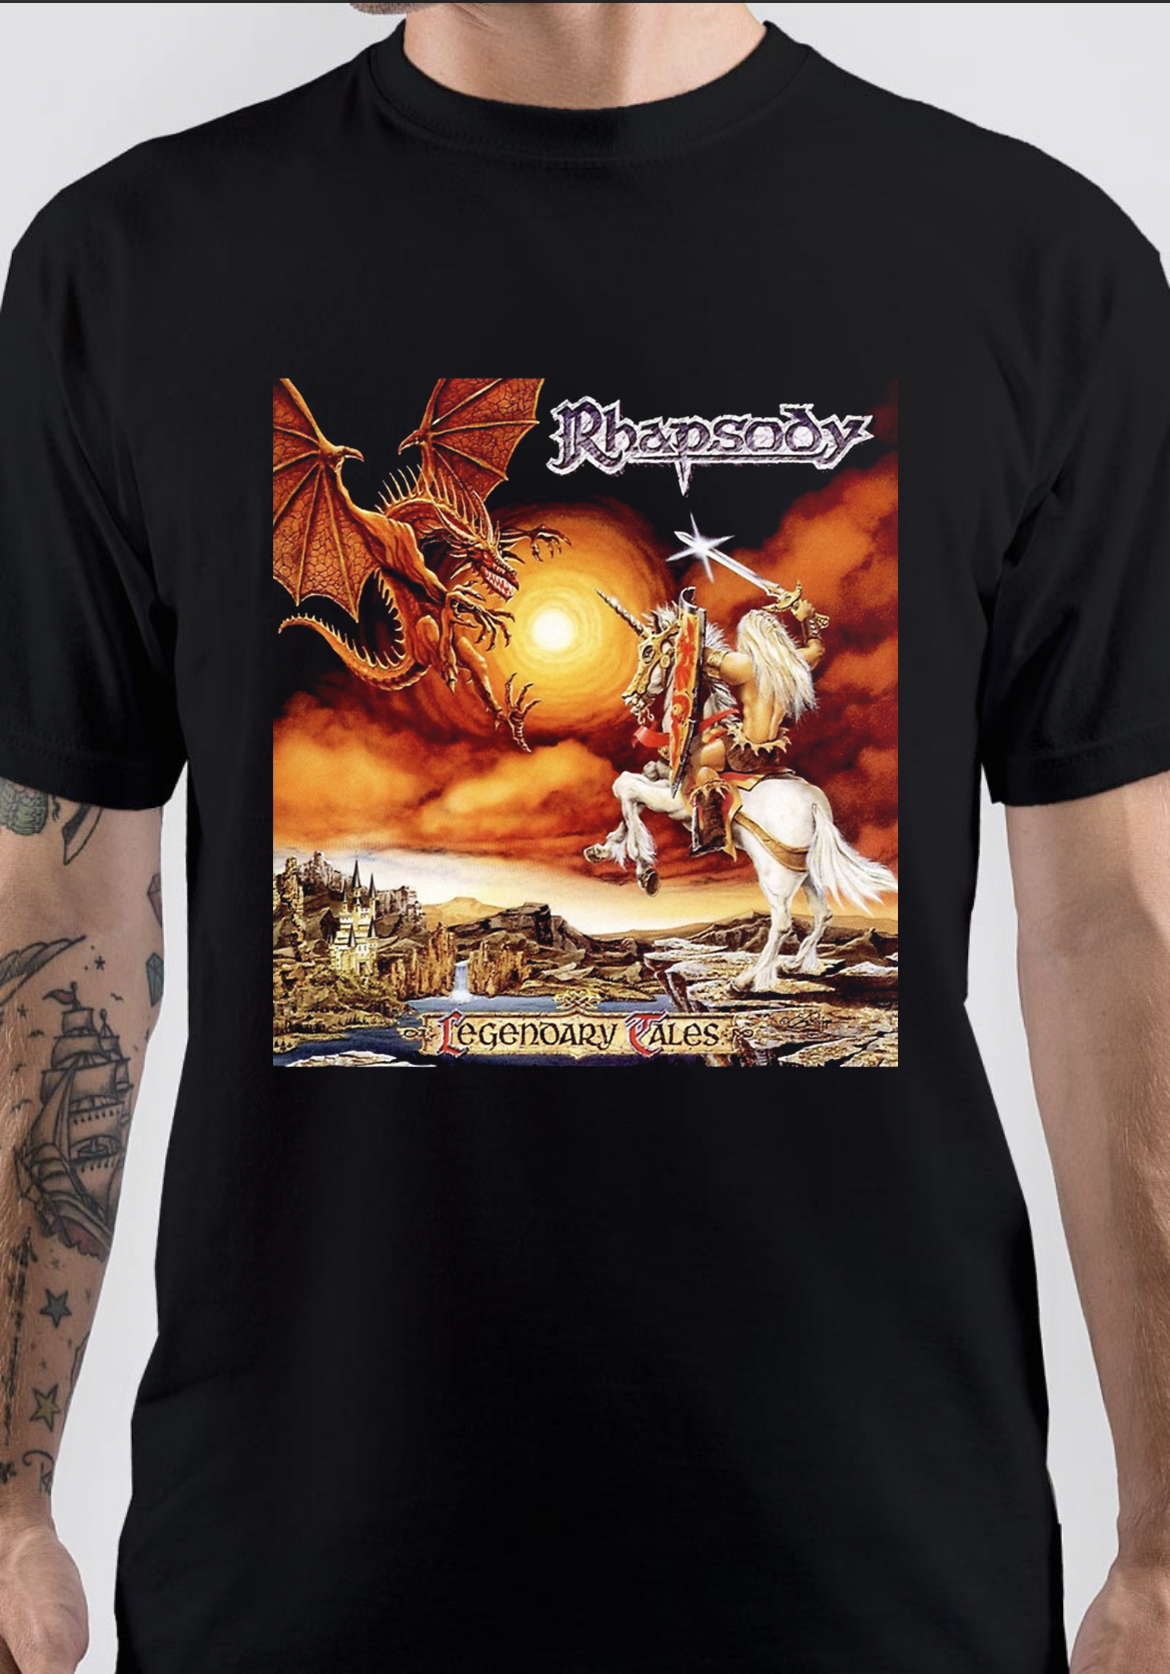 Rhapsody Of Fire T-Shirt And Merchandise